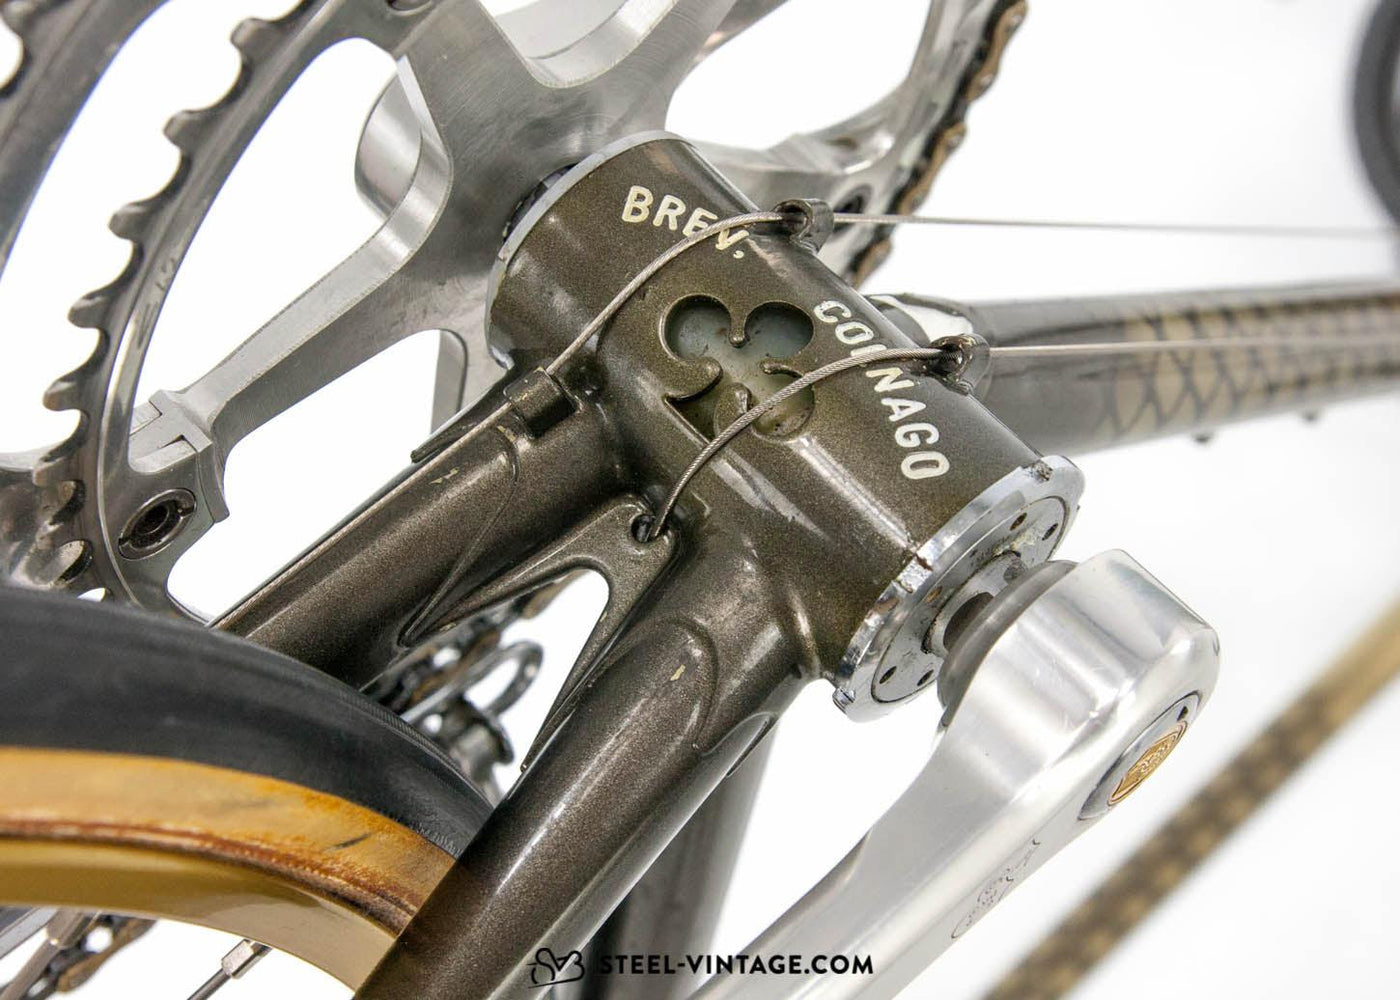 Colnago Nuovo Mexico 50th Anniversary 1983 - Steel Vintage Bikes